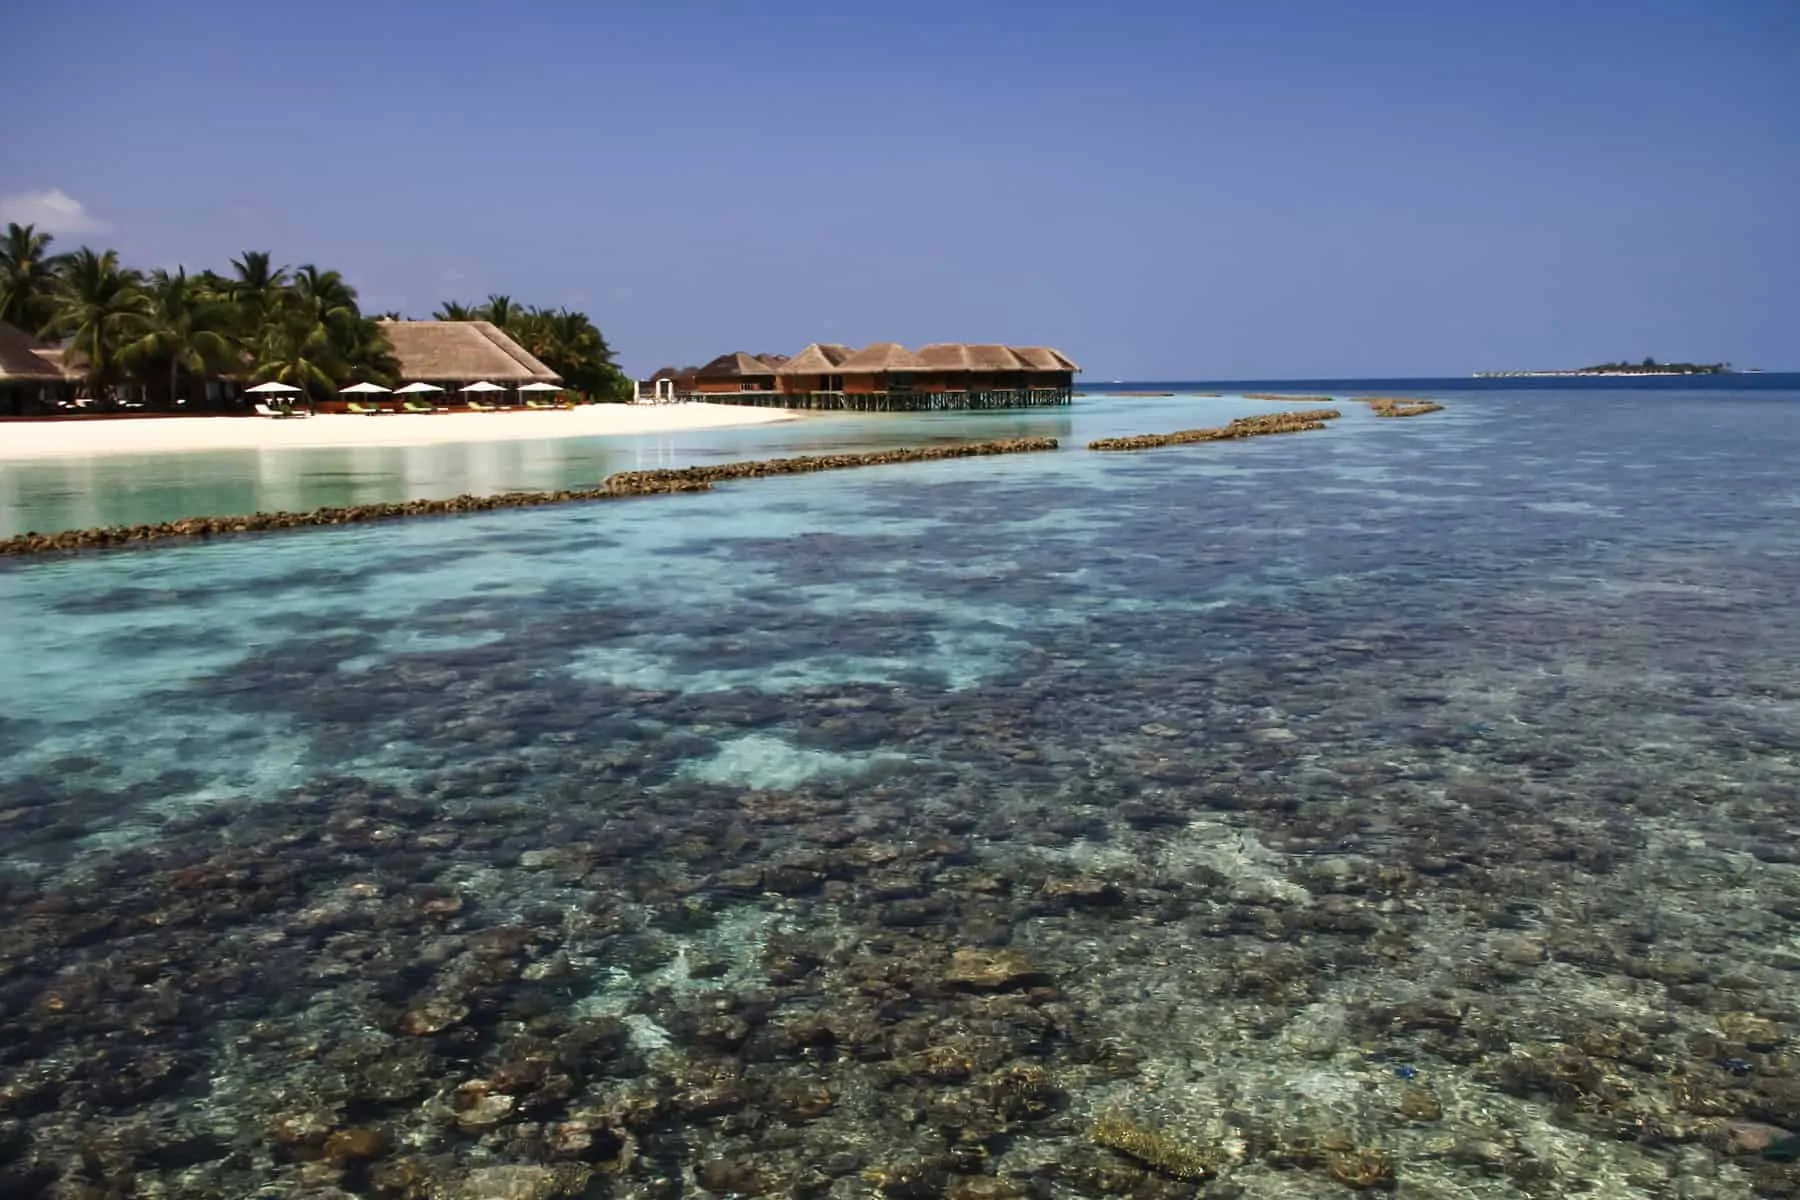 Maldivian Island Resort Clear Waters and Pacific Ocean Reef